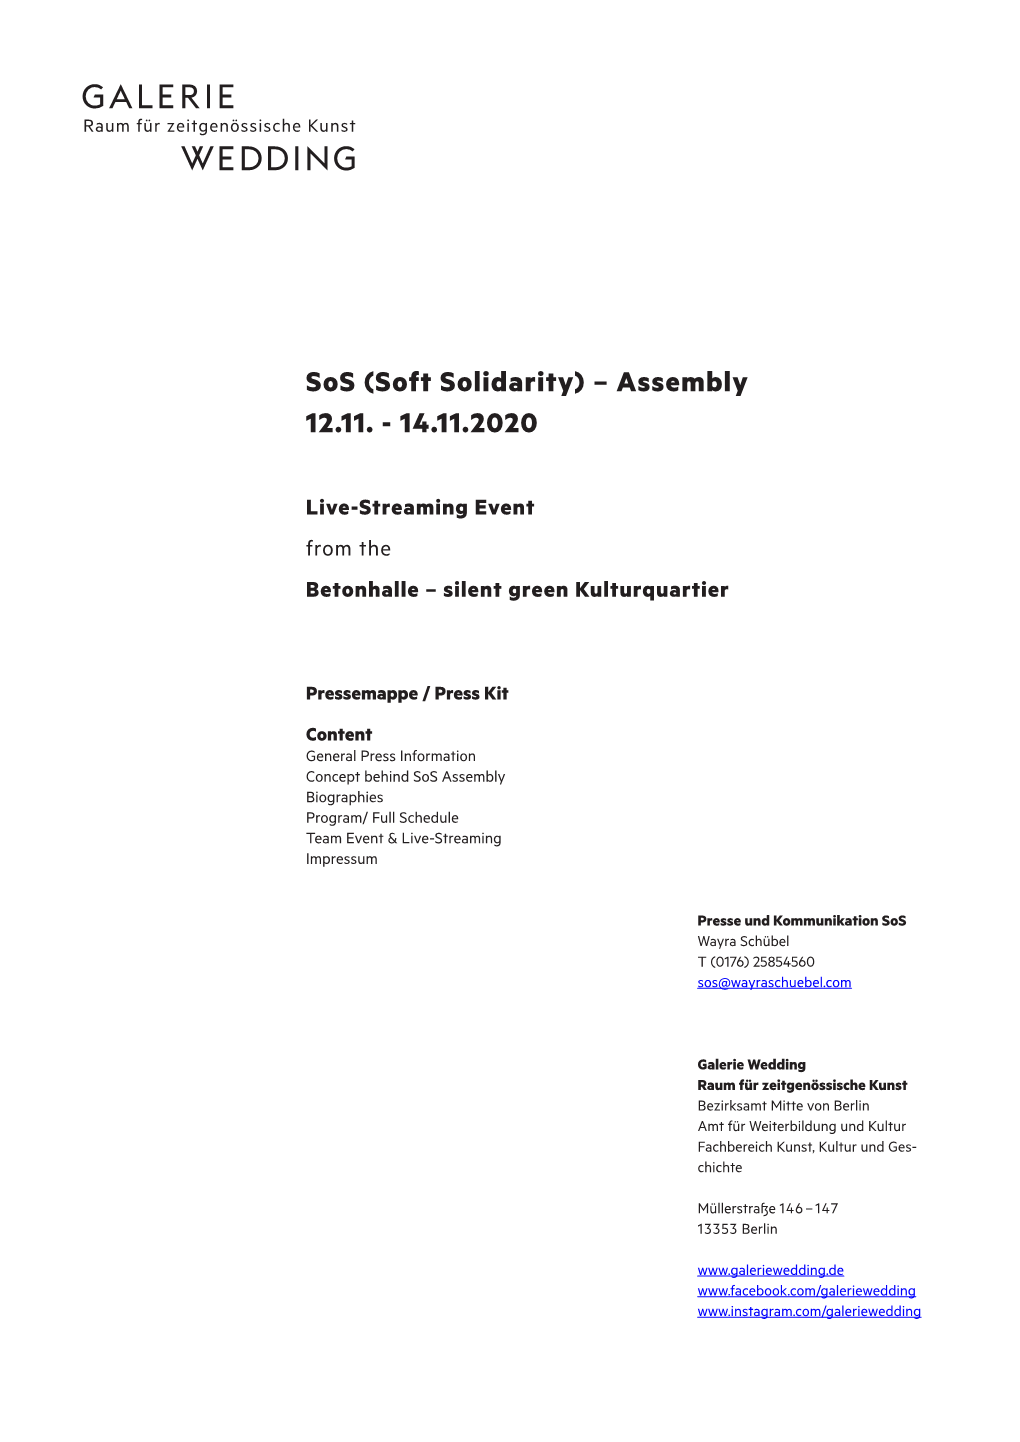 Sos (Soft Solidarity) – Assembly 12.11. - 14.11.2020